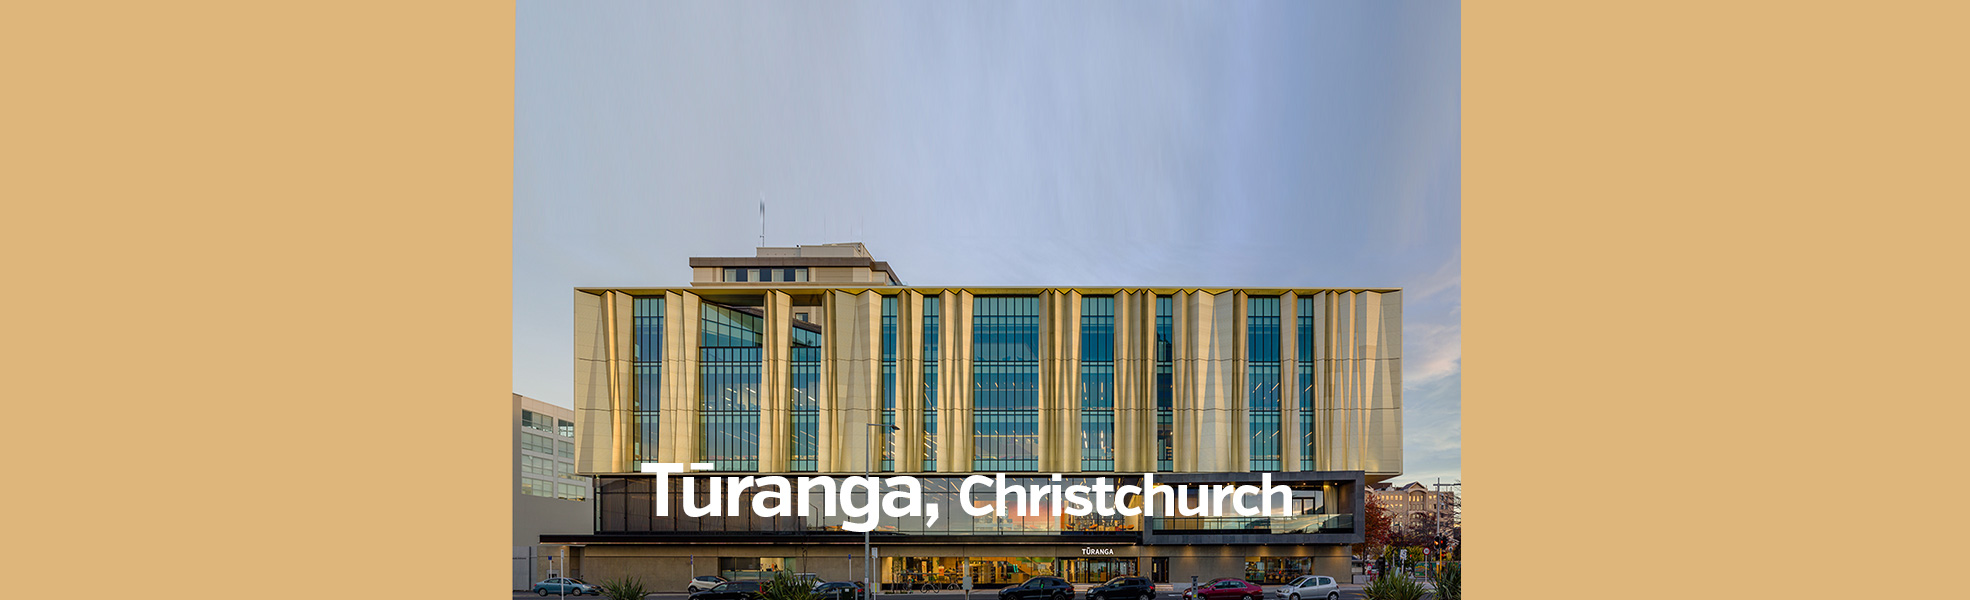 Turanga Christchurch 1970x600 Header2